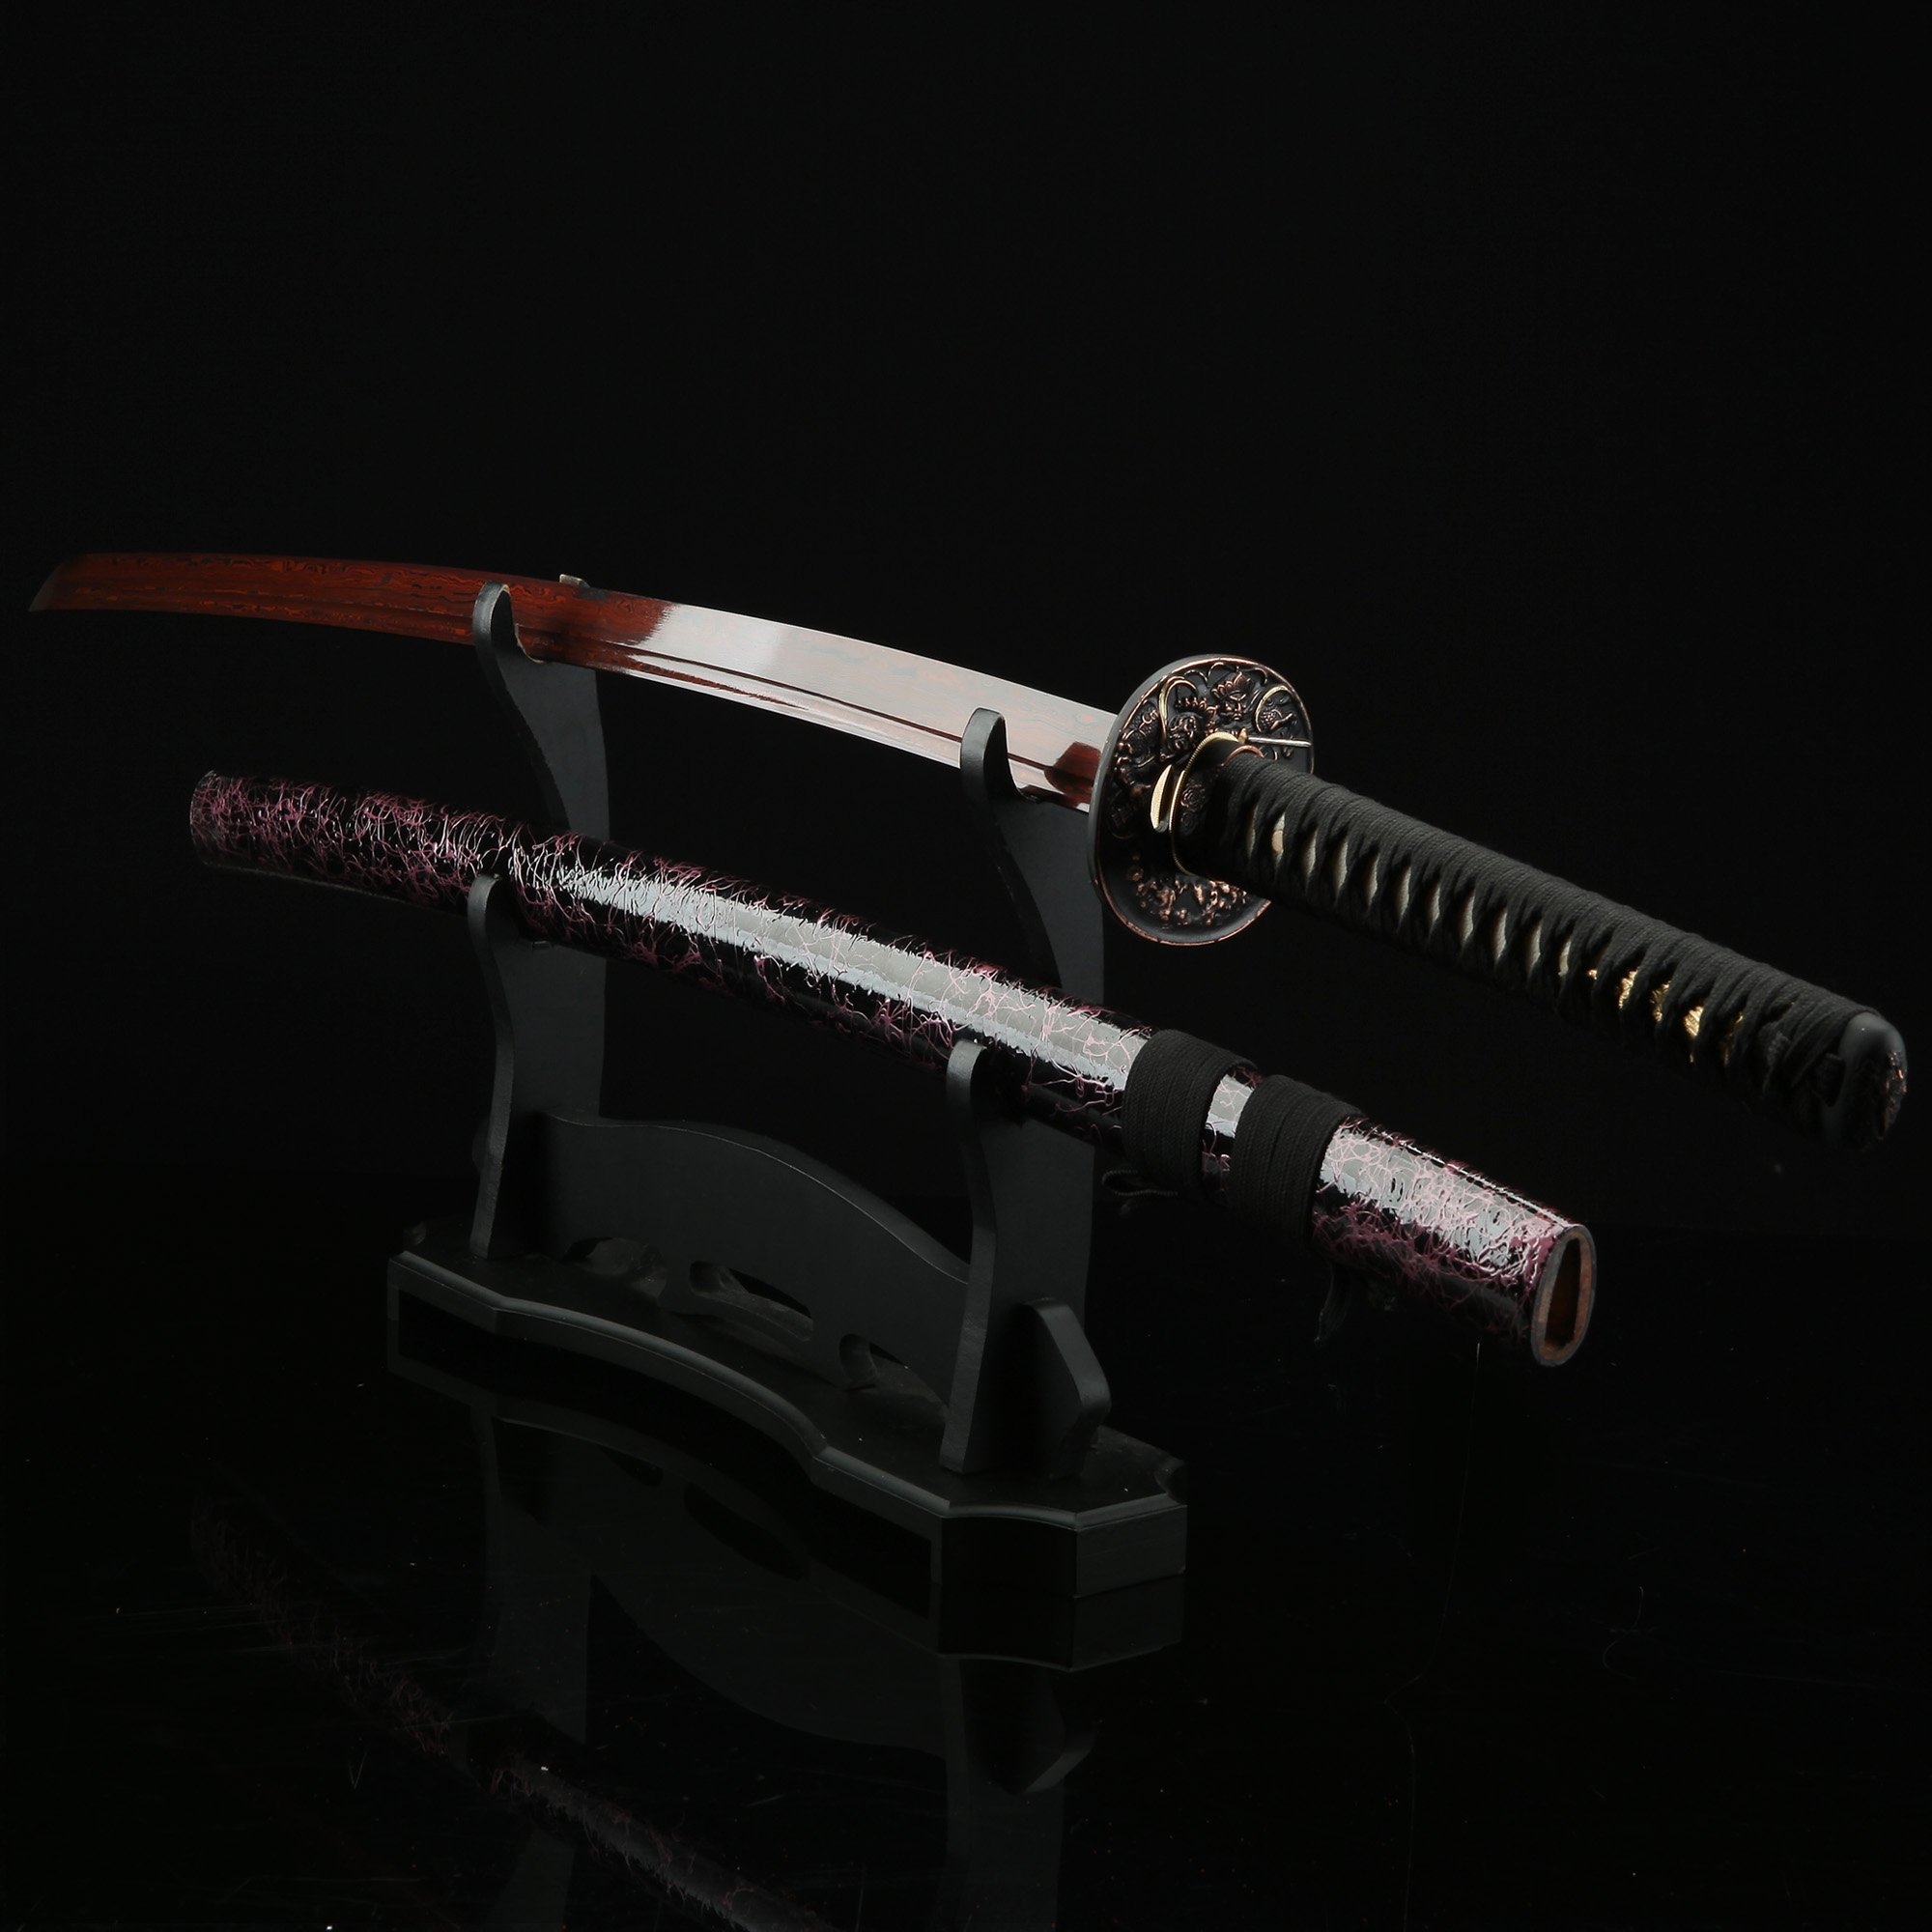 Red Blade Katana Handmade Japanese Katana Sword Damascus Steel With